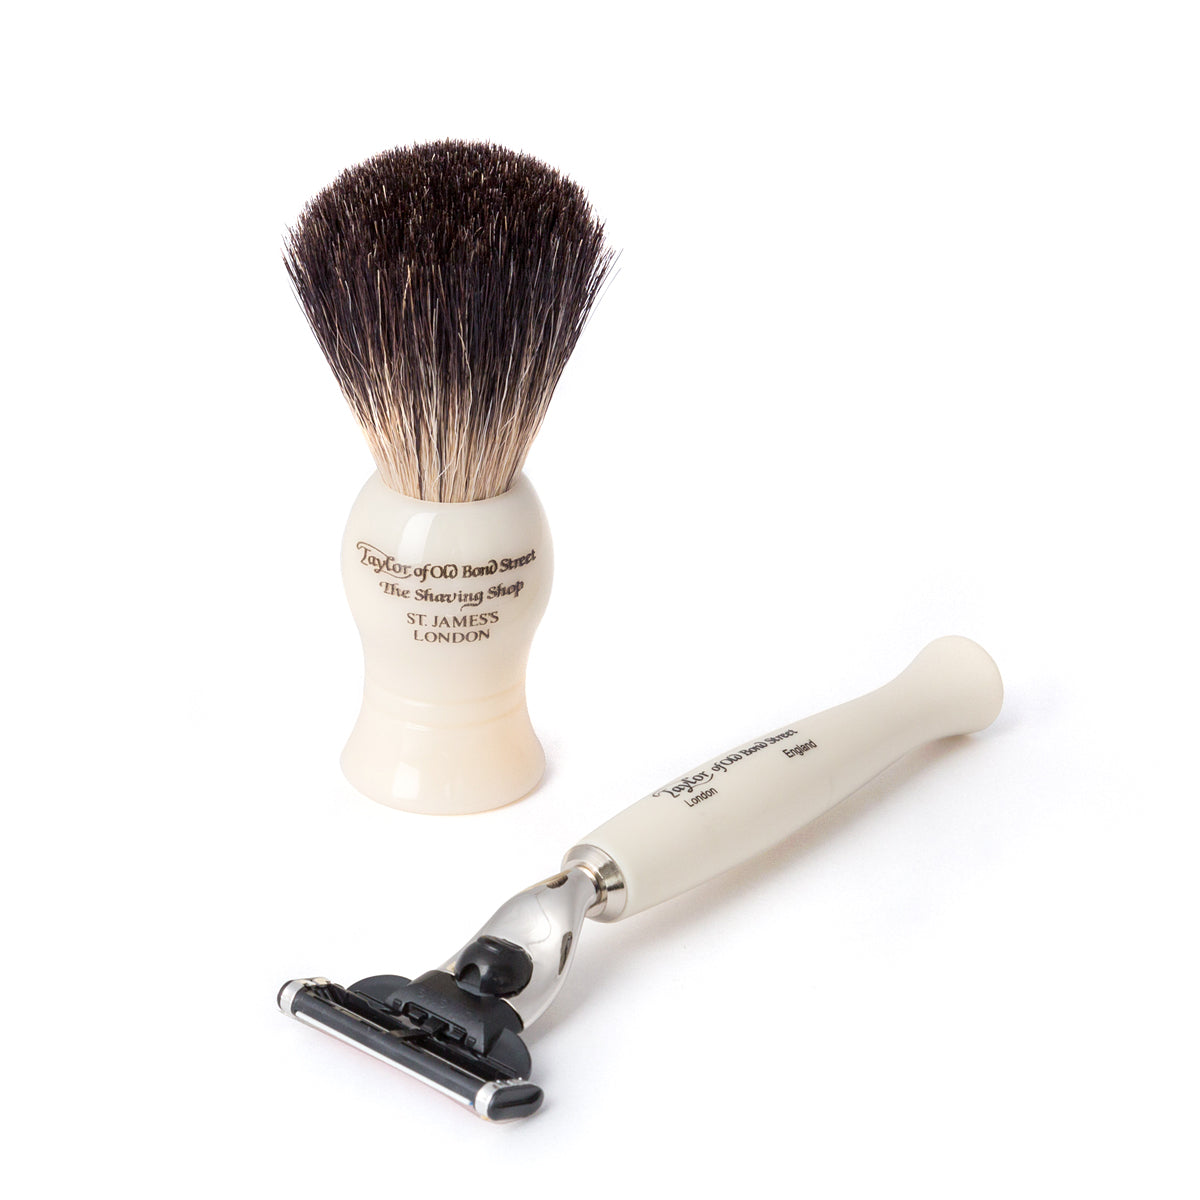 Taylor of Old Bond Street No. 74 Mach3 Shaving Set in Imitation Ivory